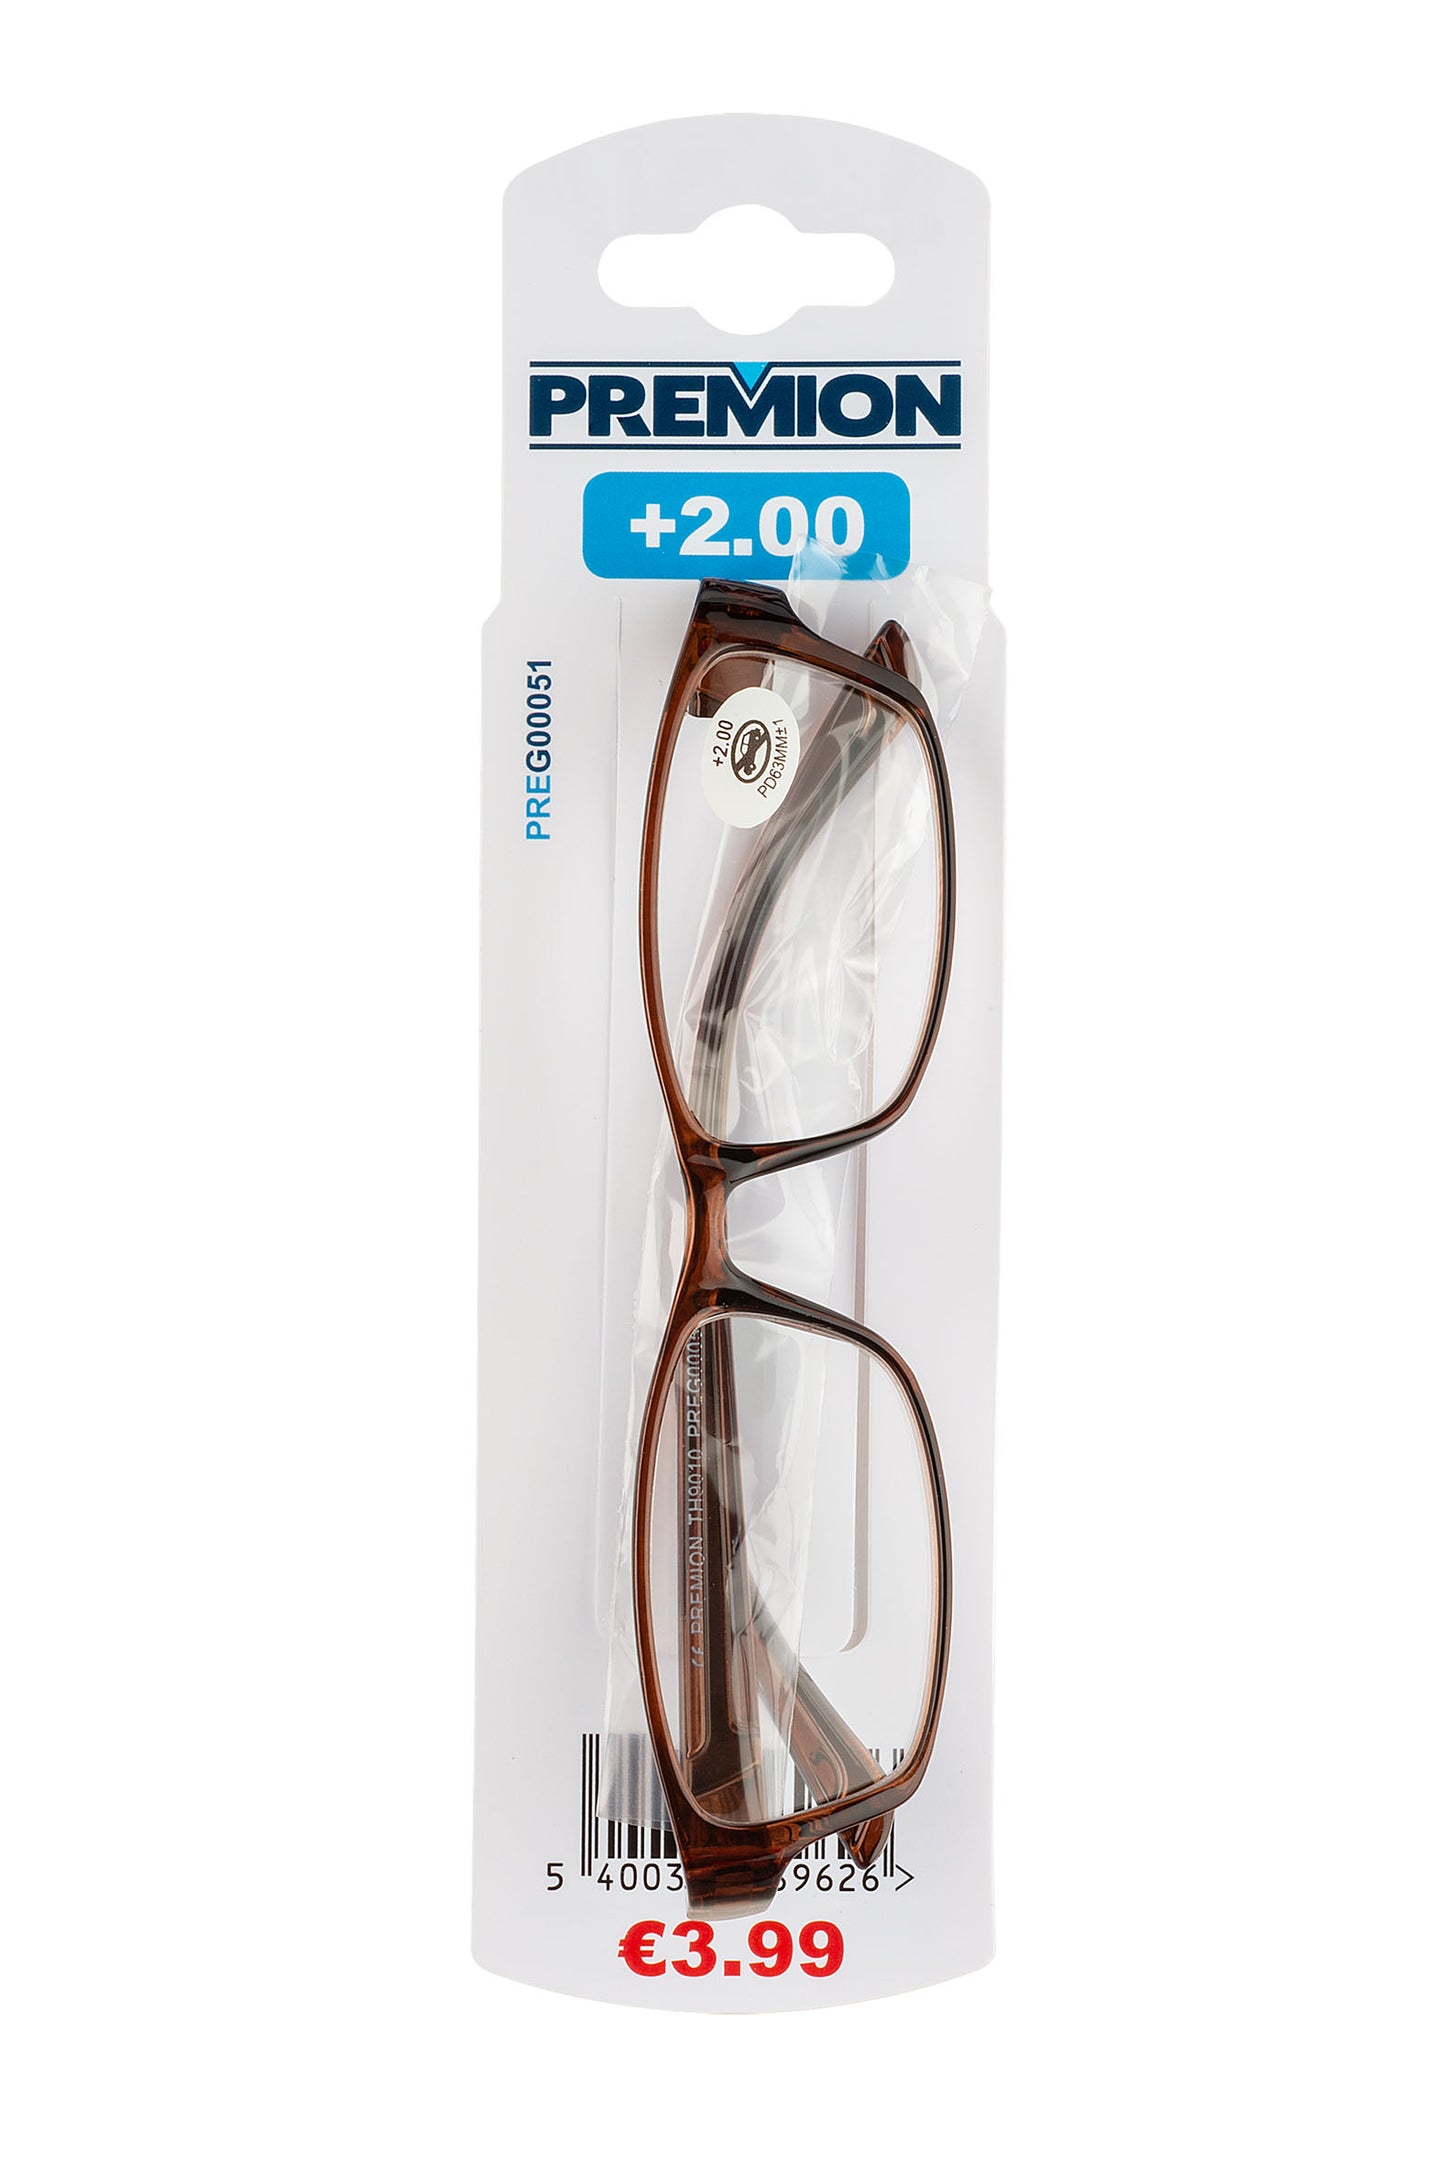 Premion - Reading Glasses - Brown/Black (Model 3)